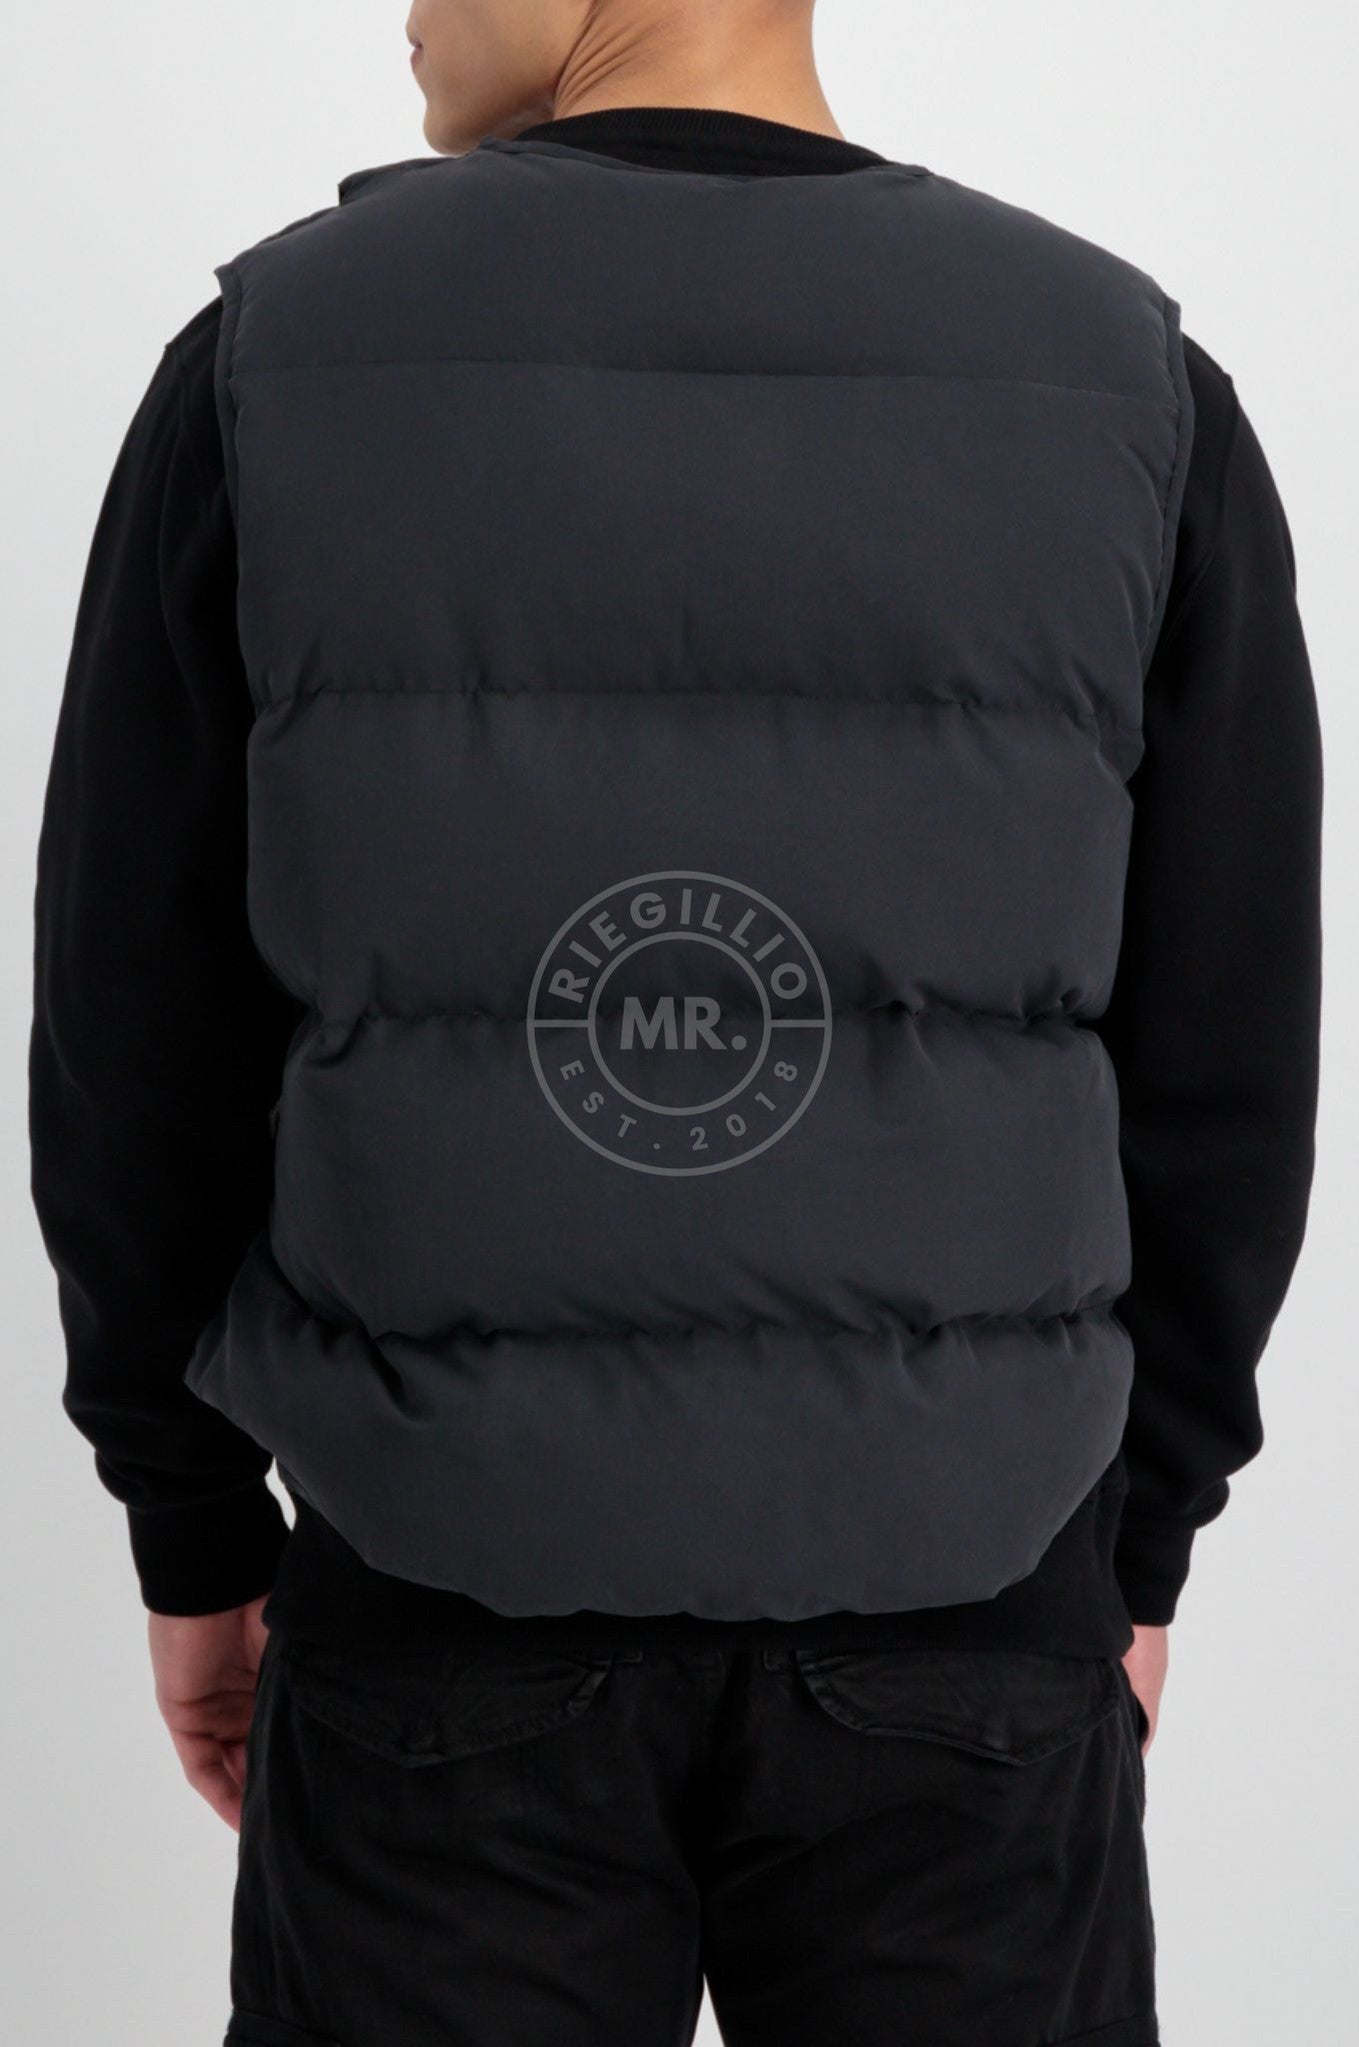 Alpha Industries Protector Puffer Vest - Black at MR. Riegillio